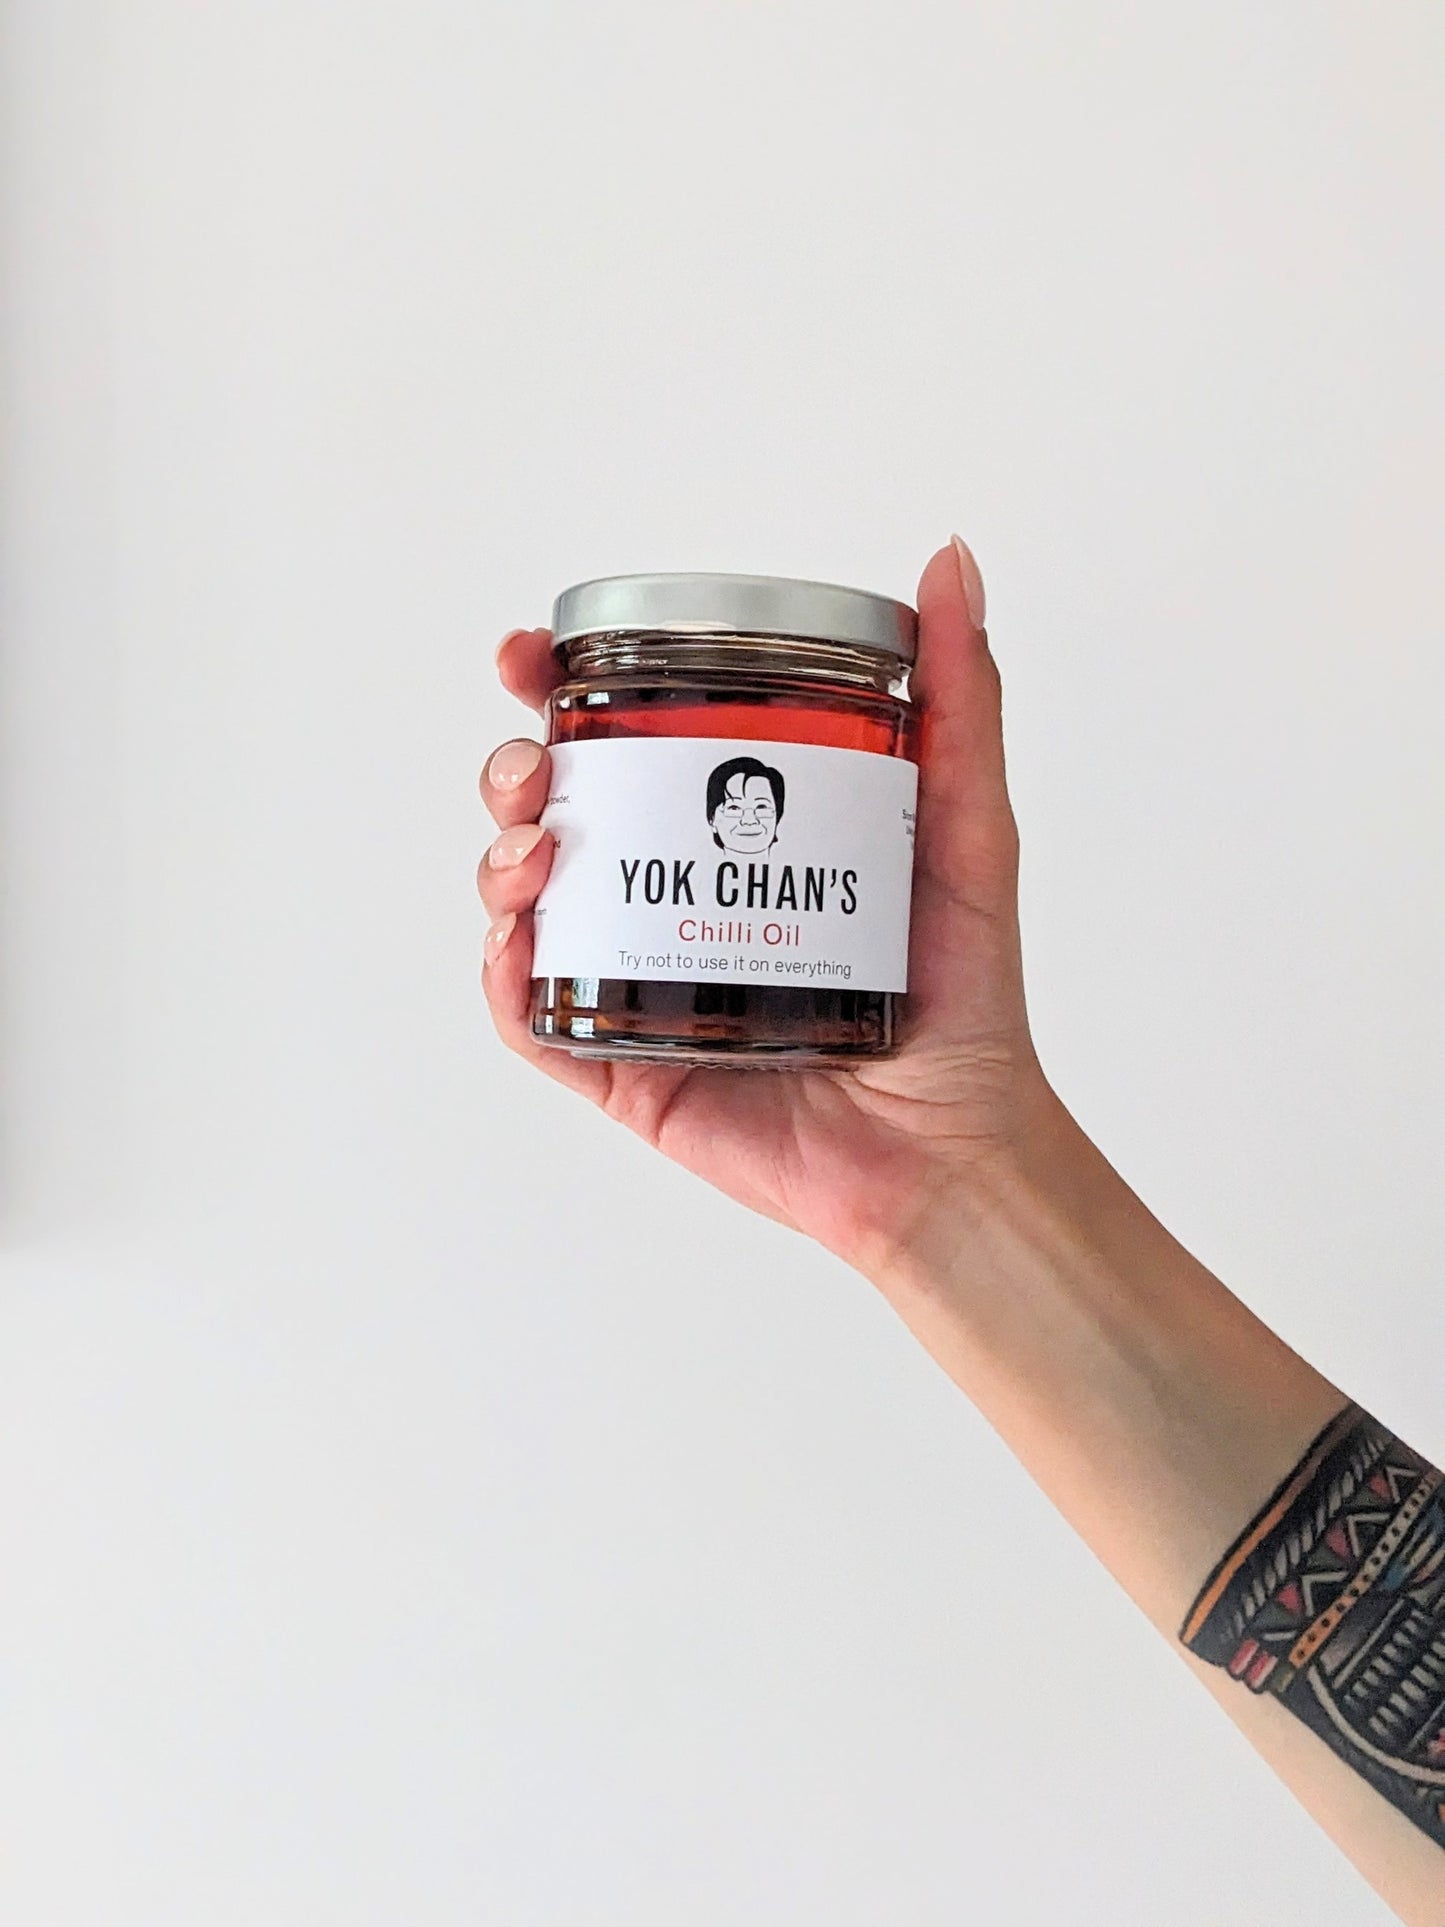 Yok Chan's Chilli Oil single jar in hand